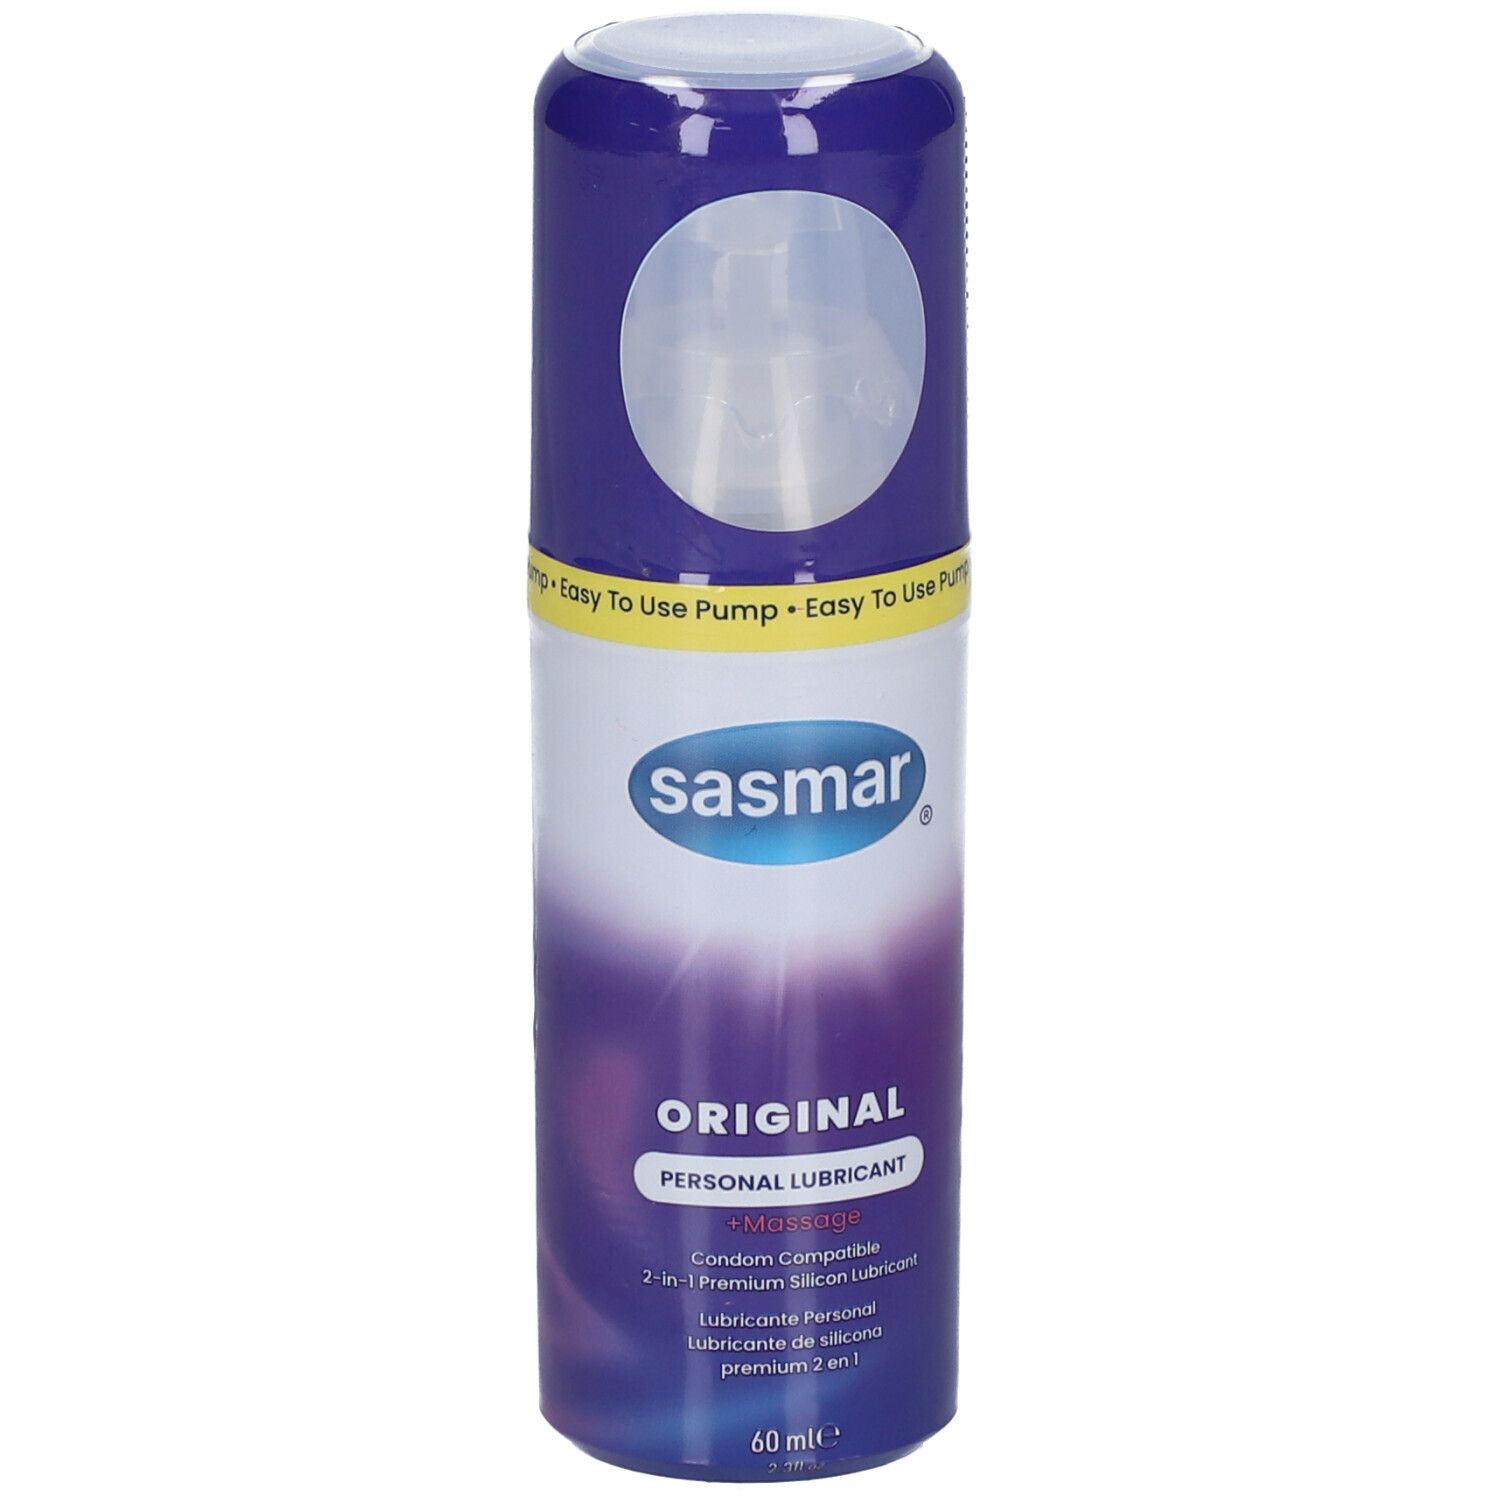 Sasmar® Personal Lubricant + Massage Original